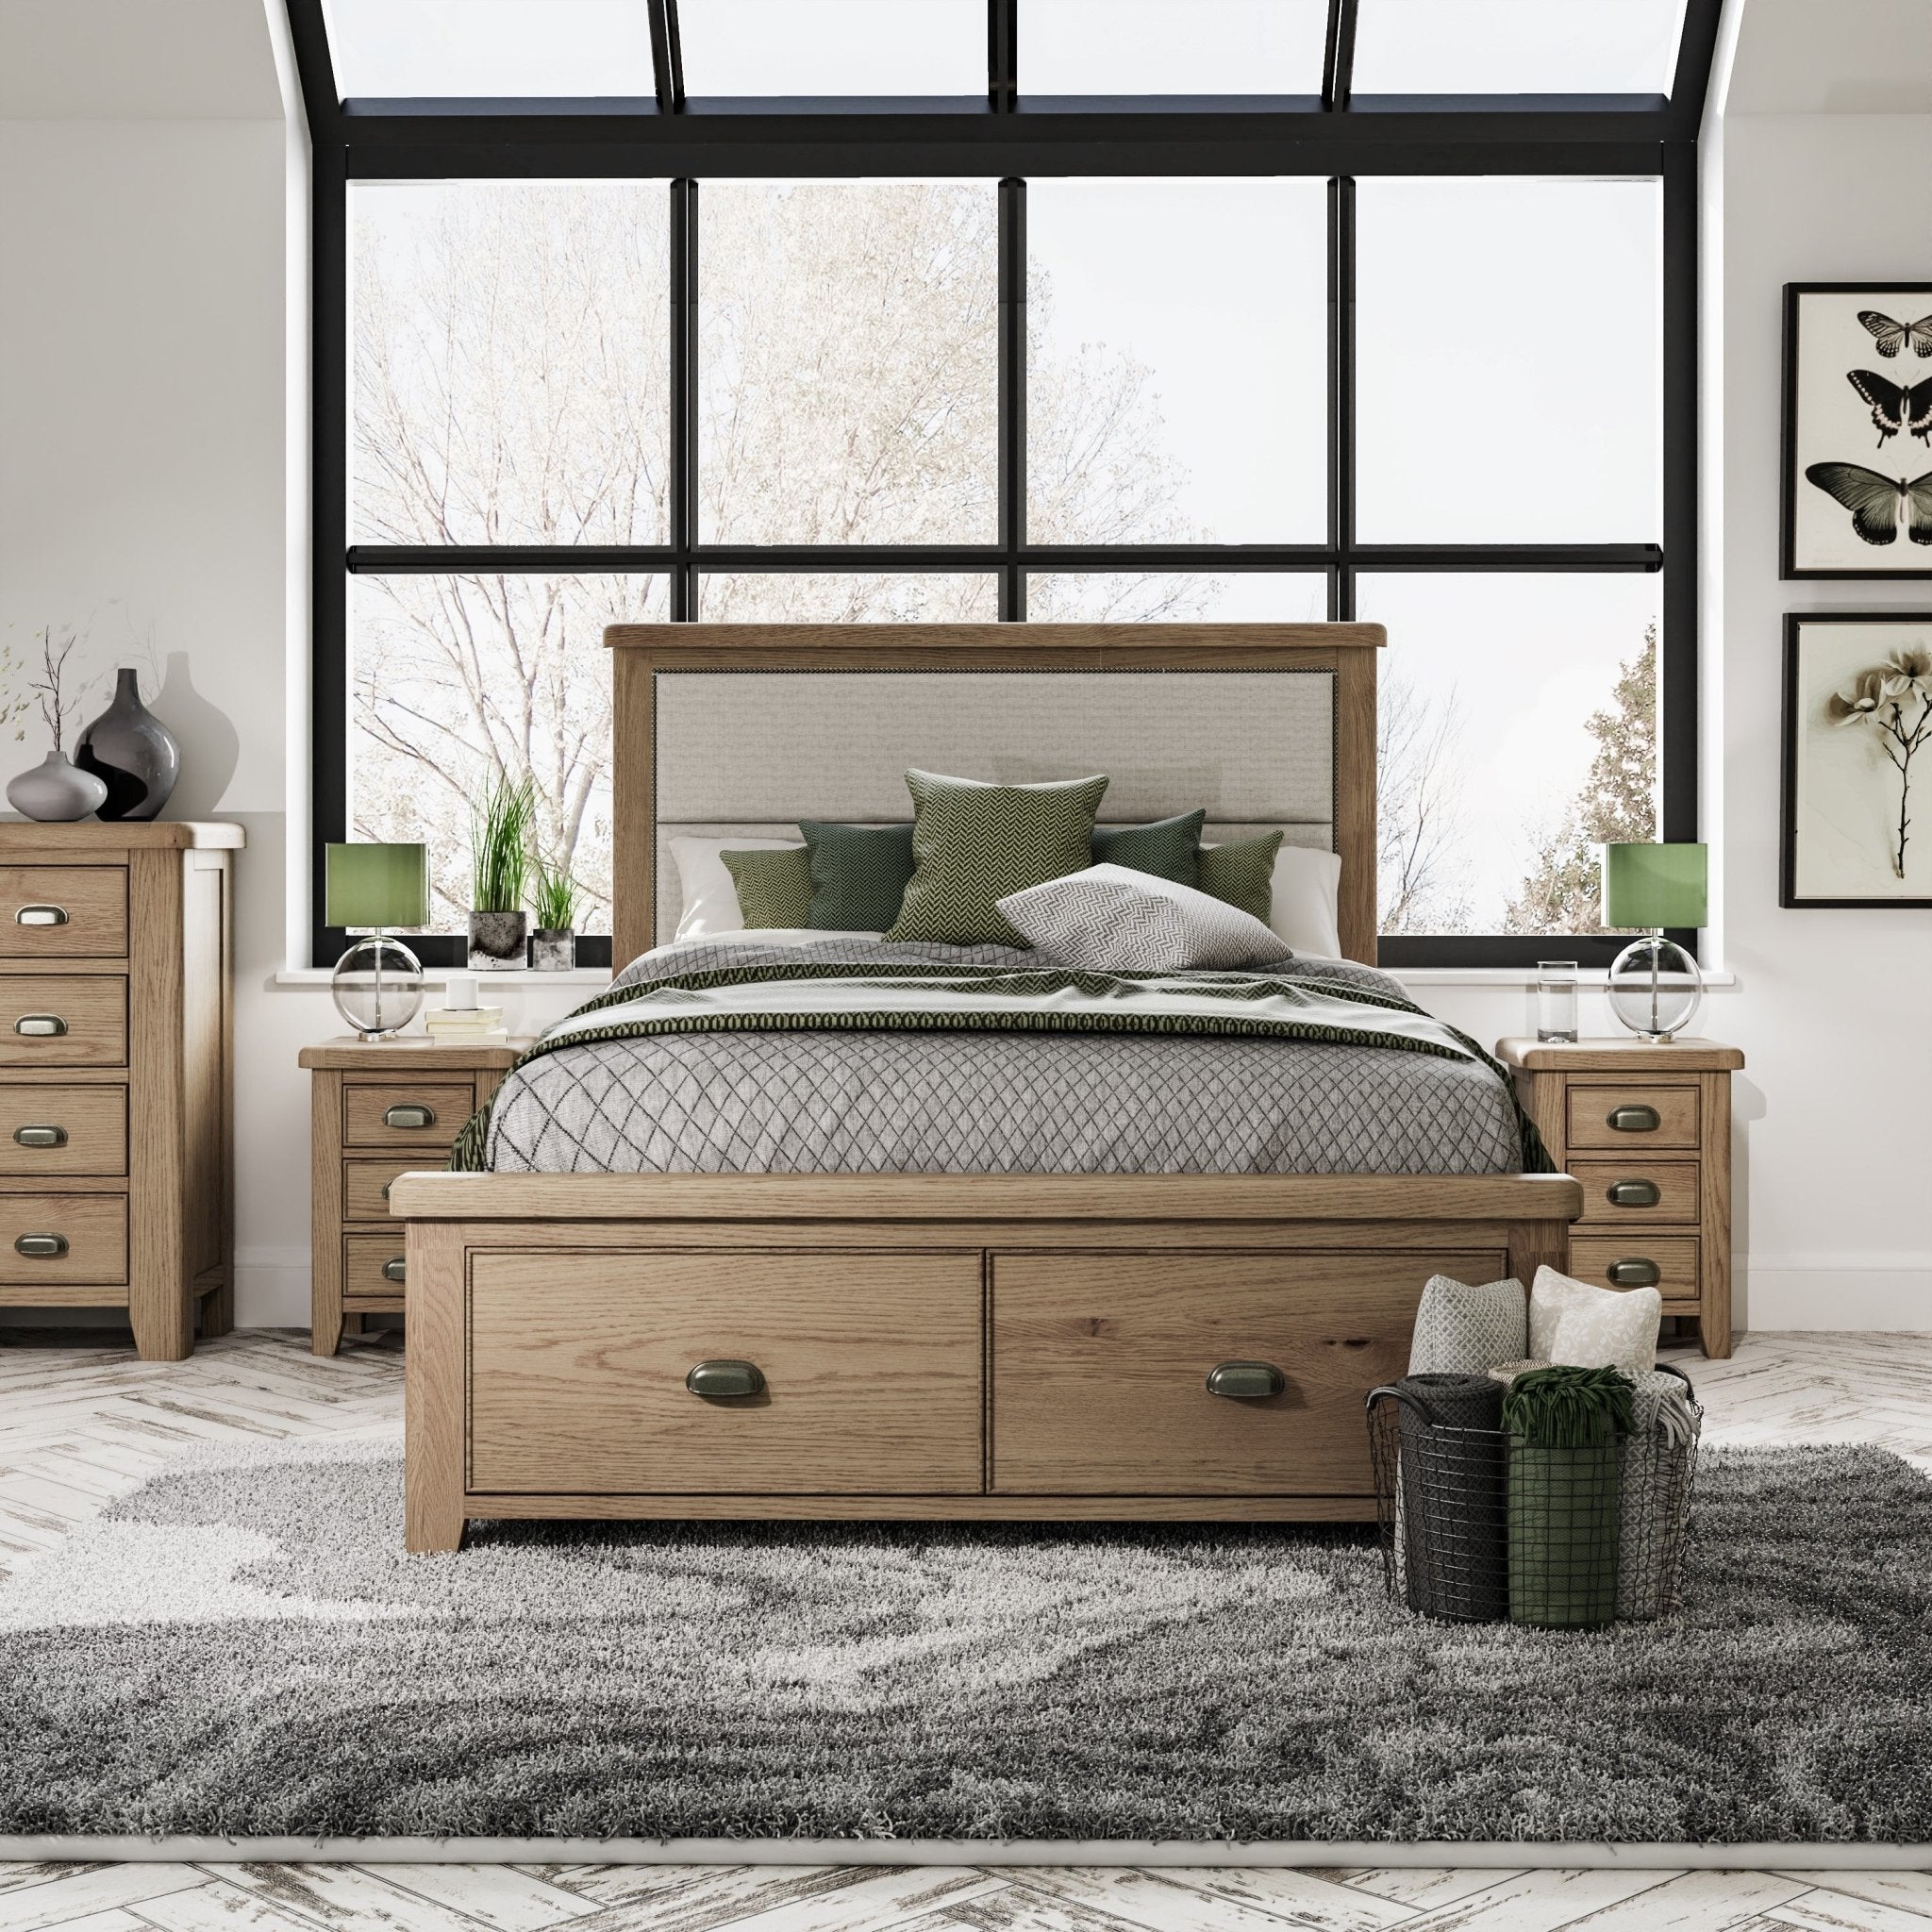 Rusper Oak 4ft 6" Double Bed Frame - Fabric Headboard & Drawers - Duck Barn Interiors